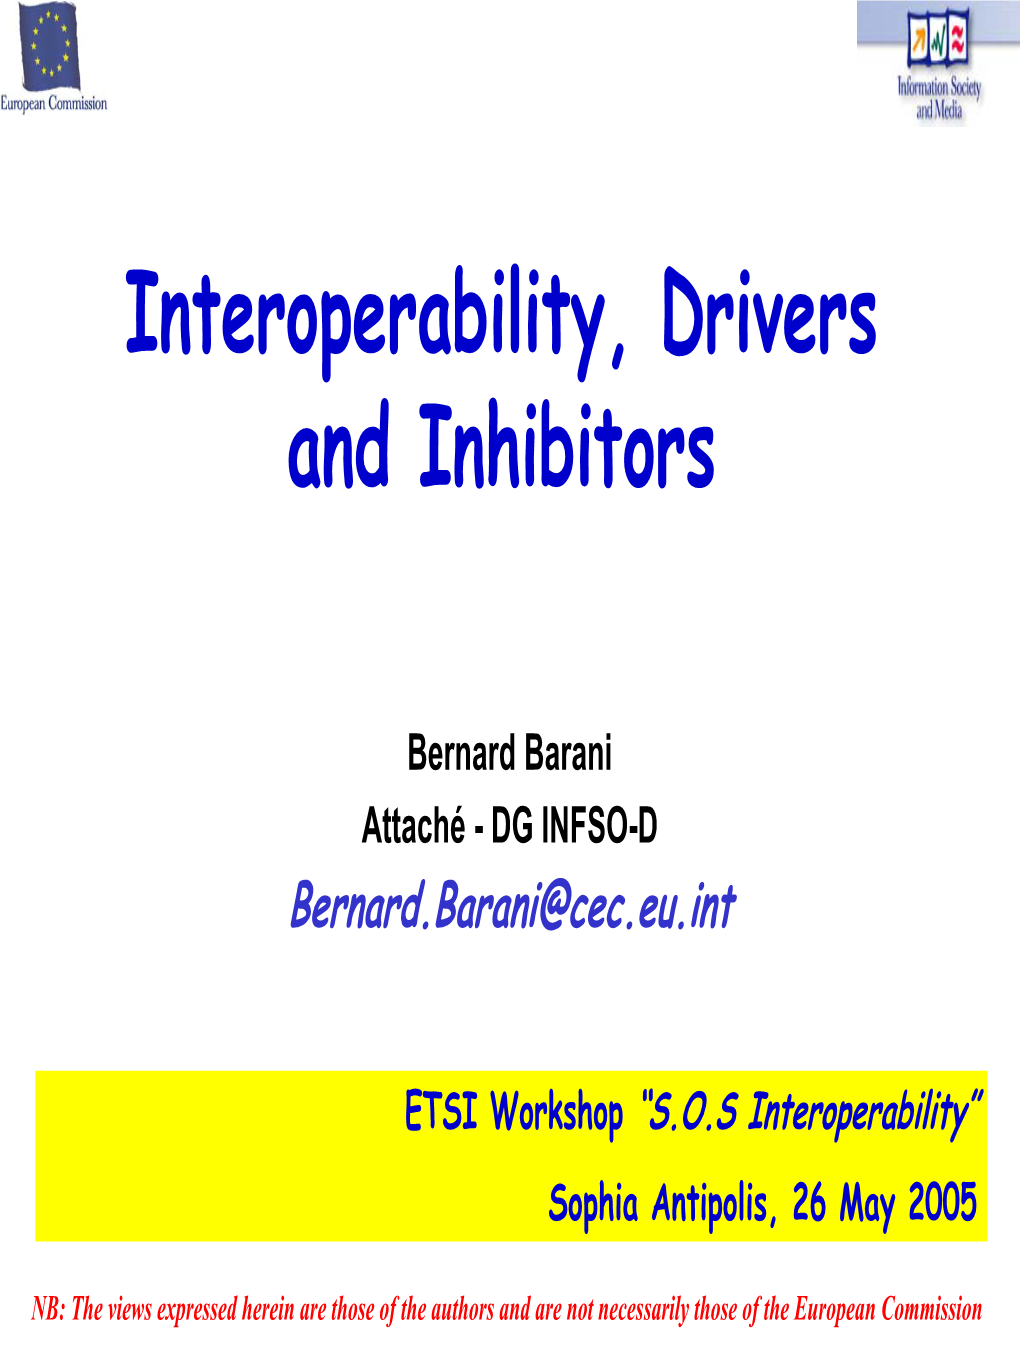 SOS Interoperability